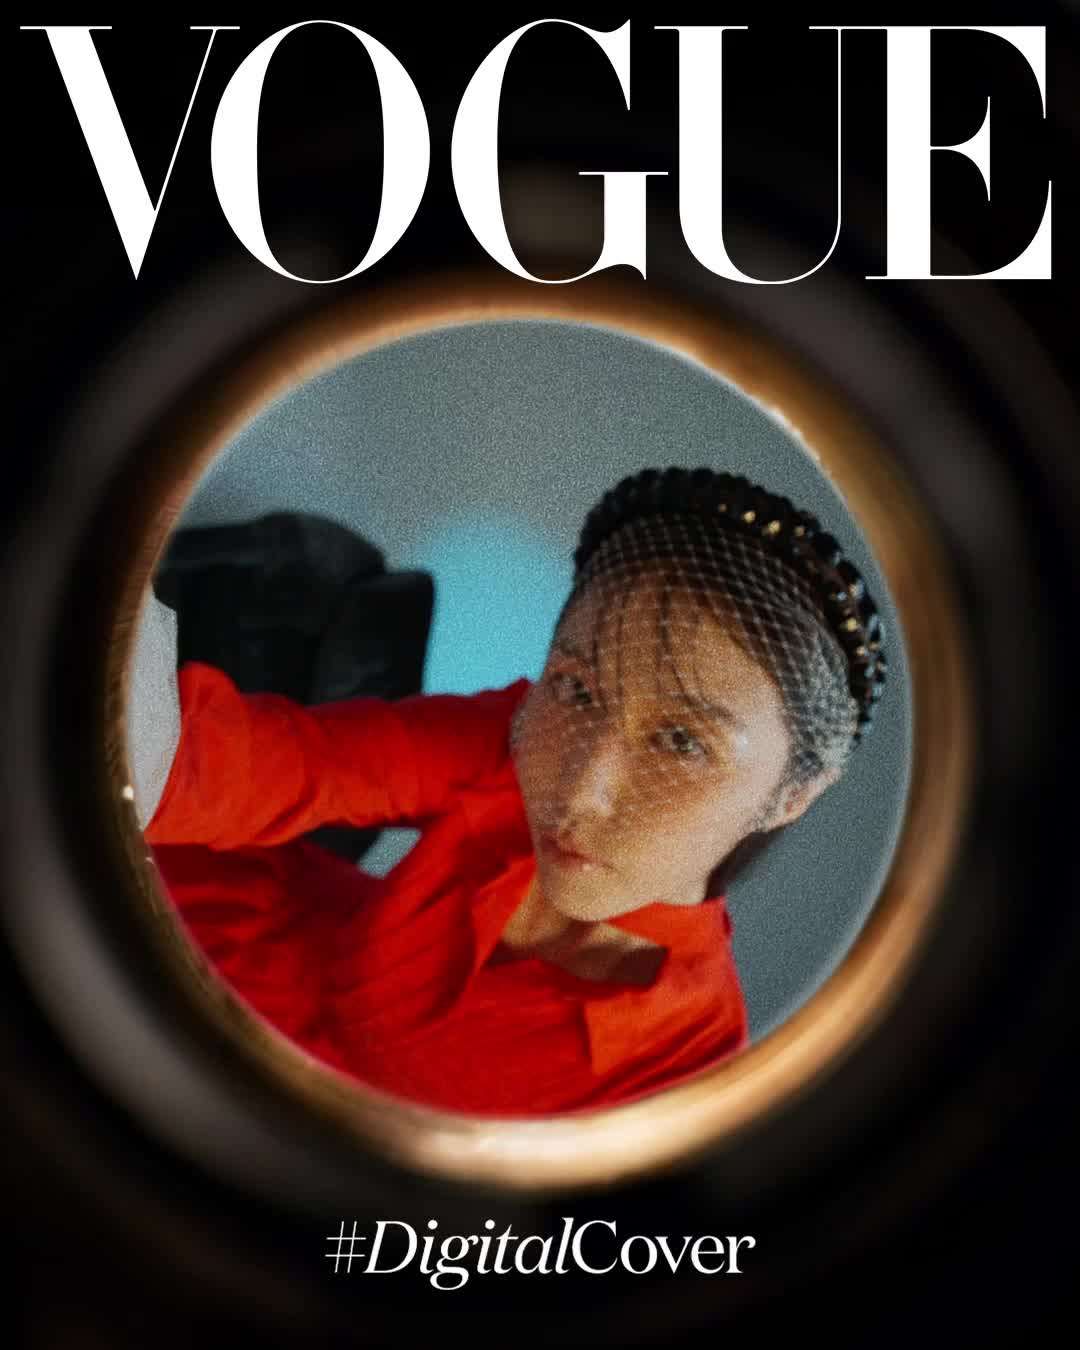 Vogue Taiwan #DigitalCover 邵雨薇IvyShao